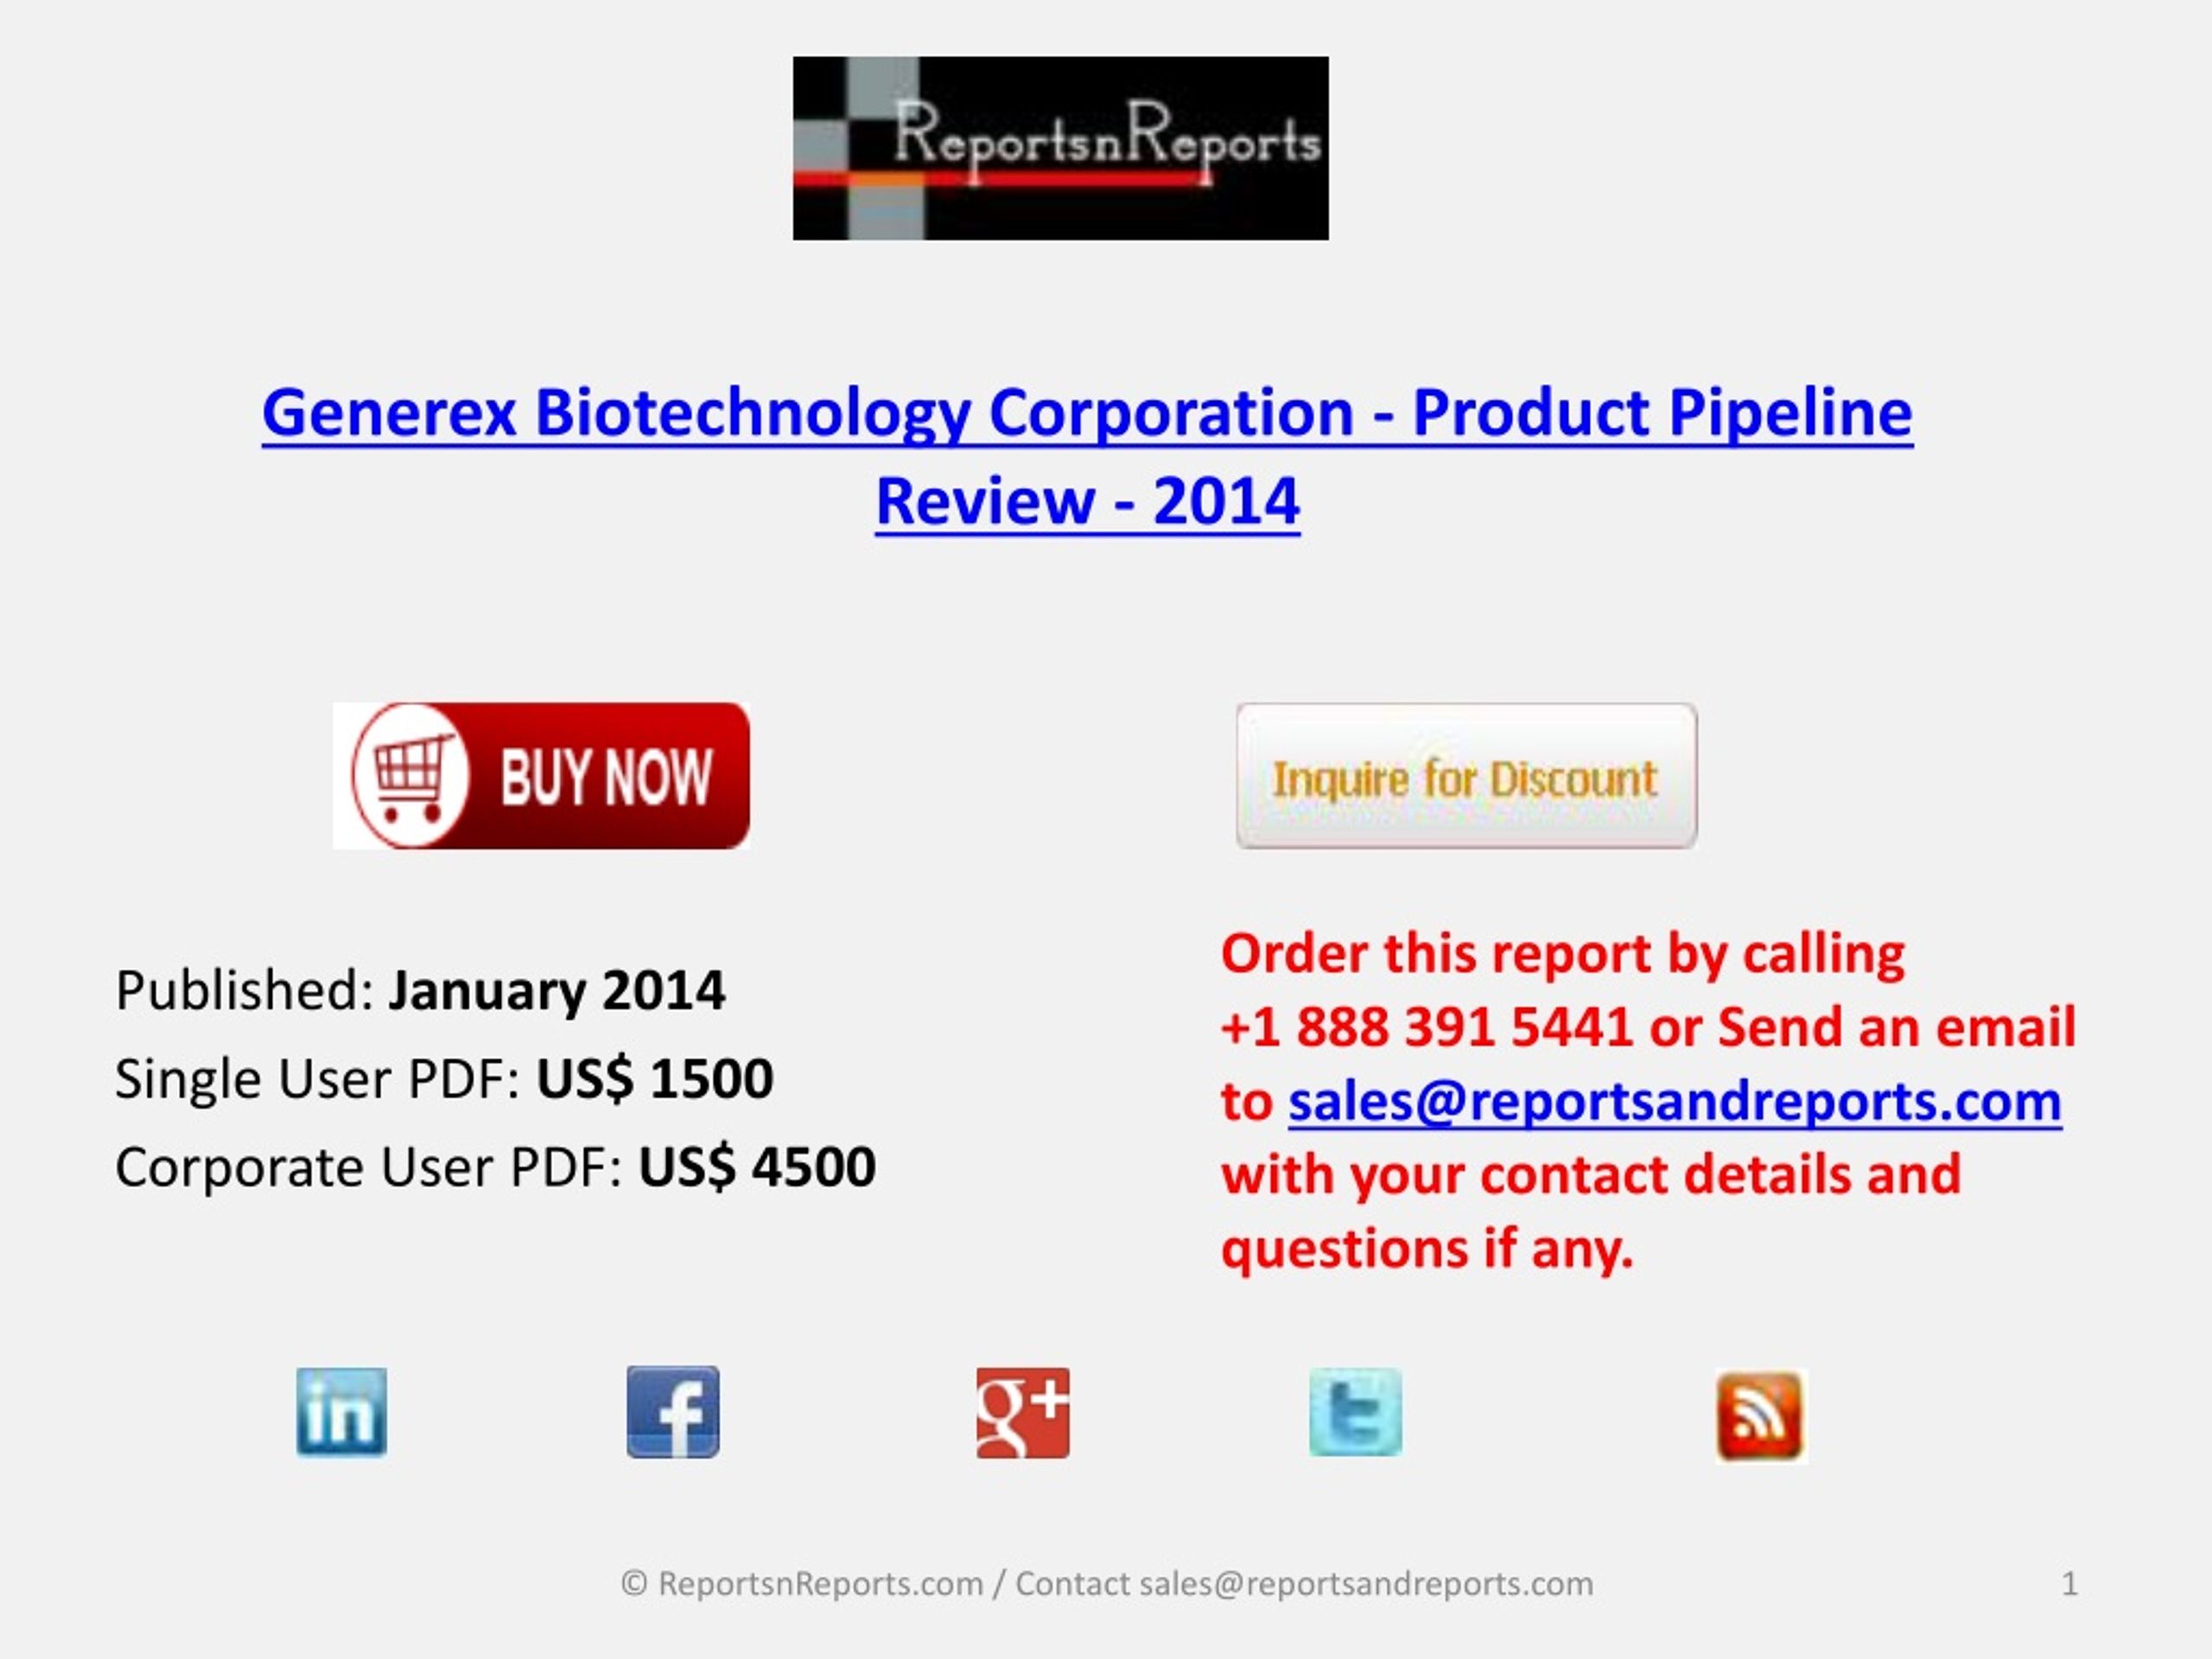 PPT Generex Biotechnology Corporation Market Overview 2014